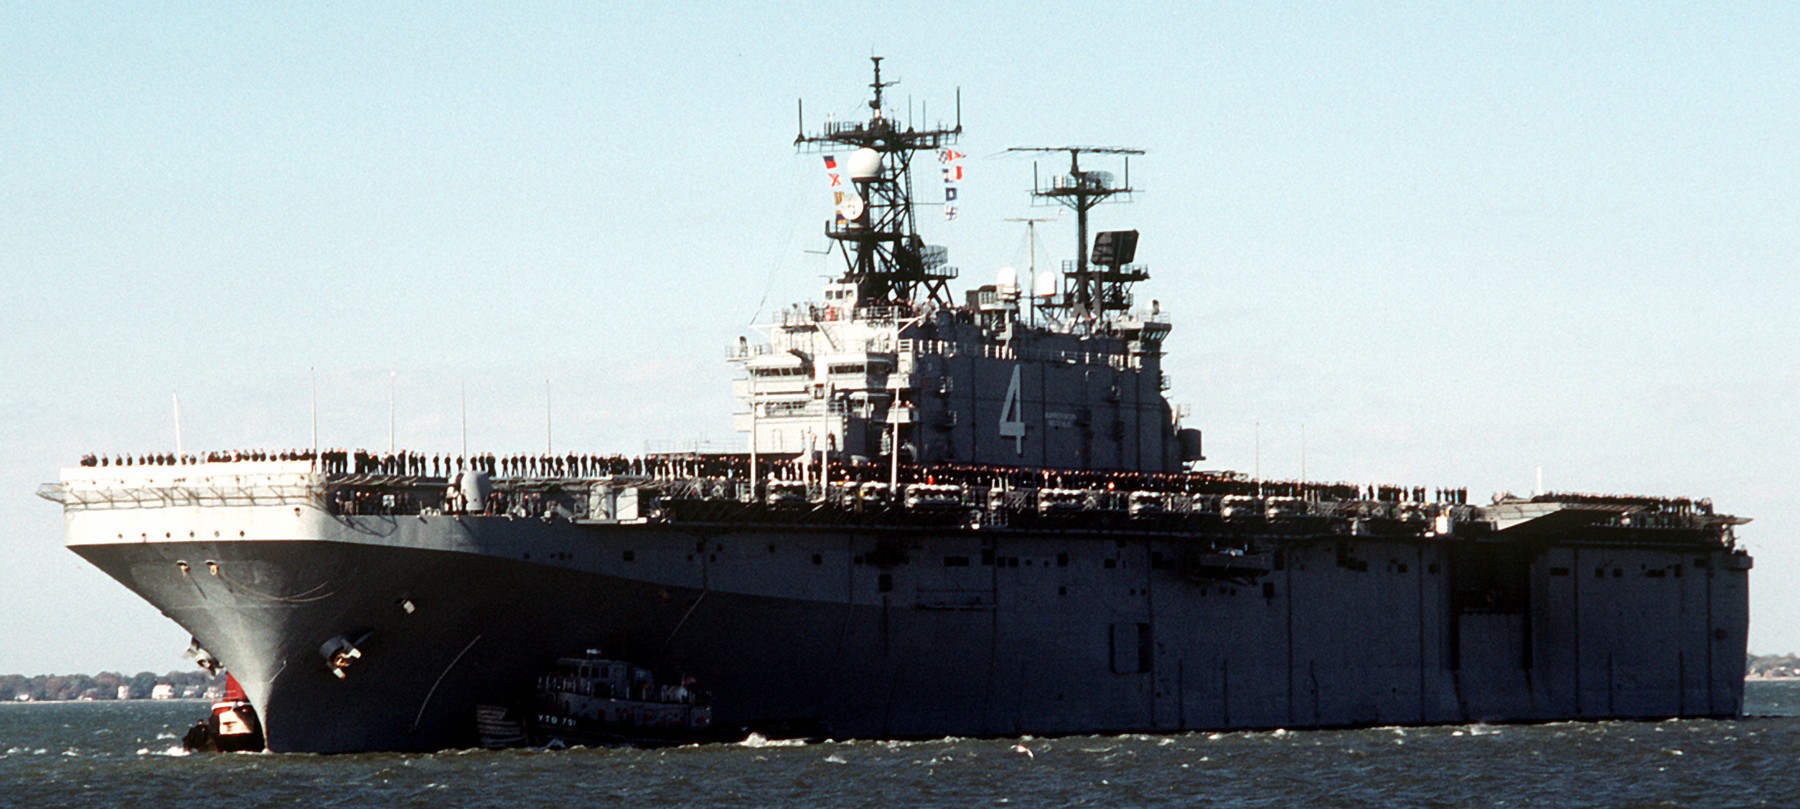 lha-4 uss nassau tarawa class amphibious assault ship us navy 119